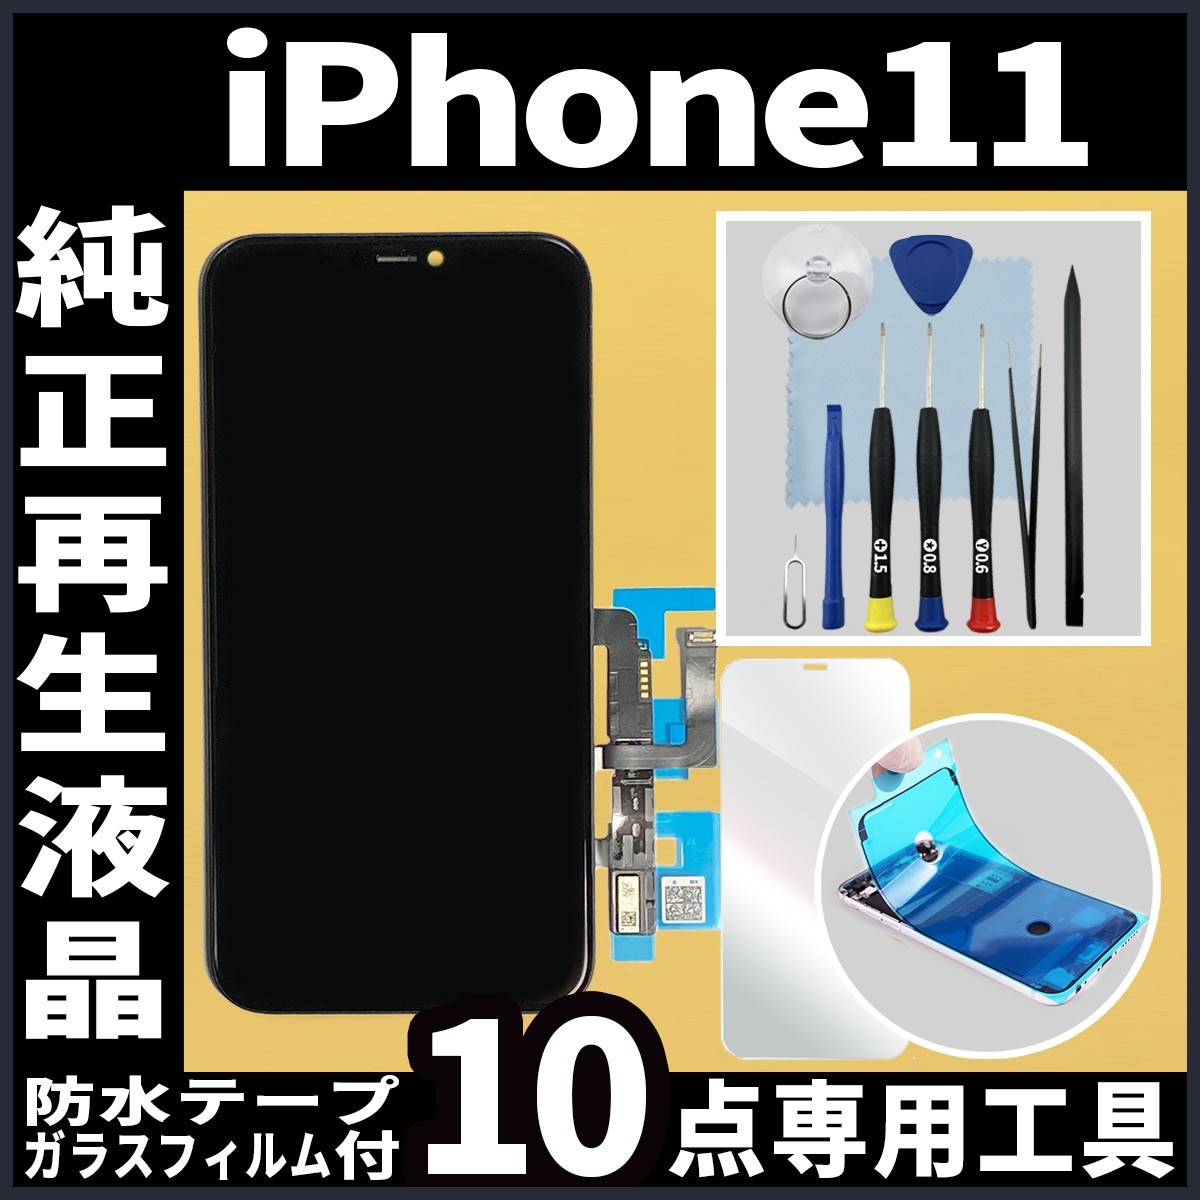 iPhone11 純正再生品 フロントパネル 純正液晶 自社再生 業者 LCD 交換 リペア 画面割れ iphone 修理 ガラス割れ 防水テープ